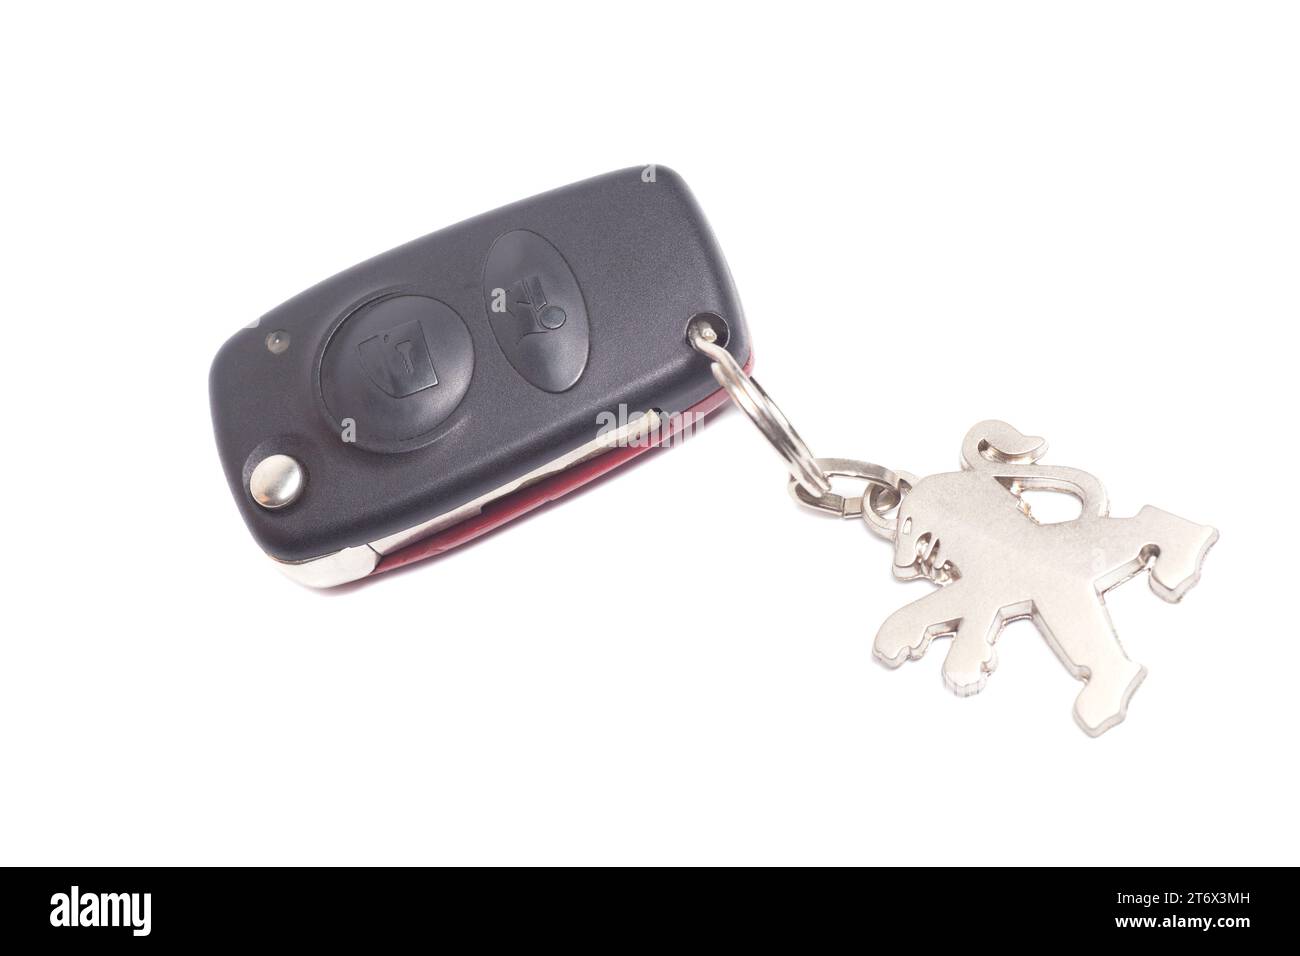 Peugeot Autoschlüssel mit Leder Schlüsselanhänger Stockfotografie - Alamy